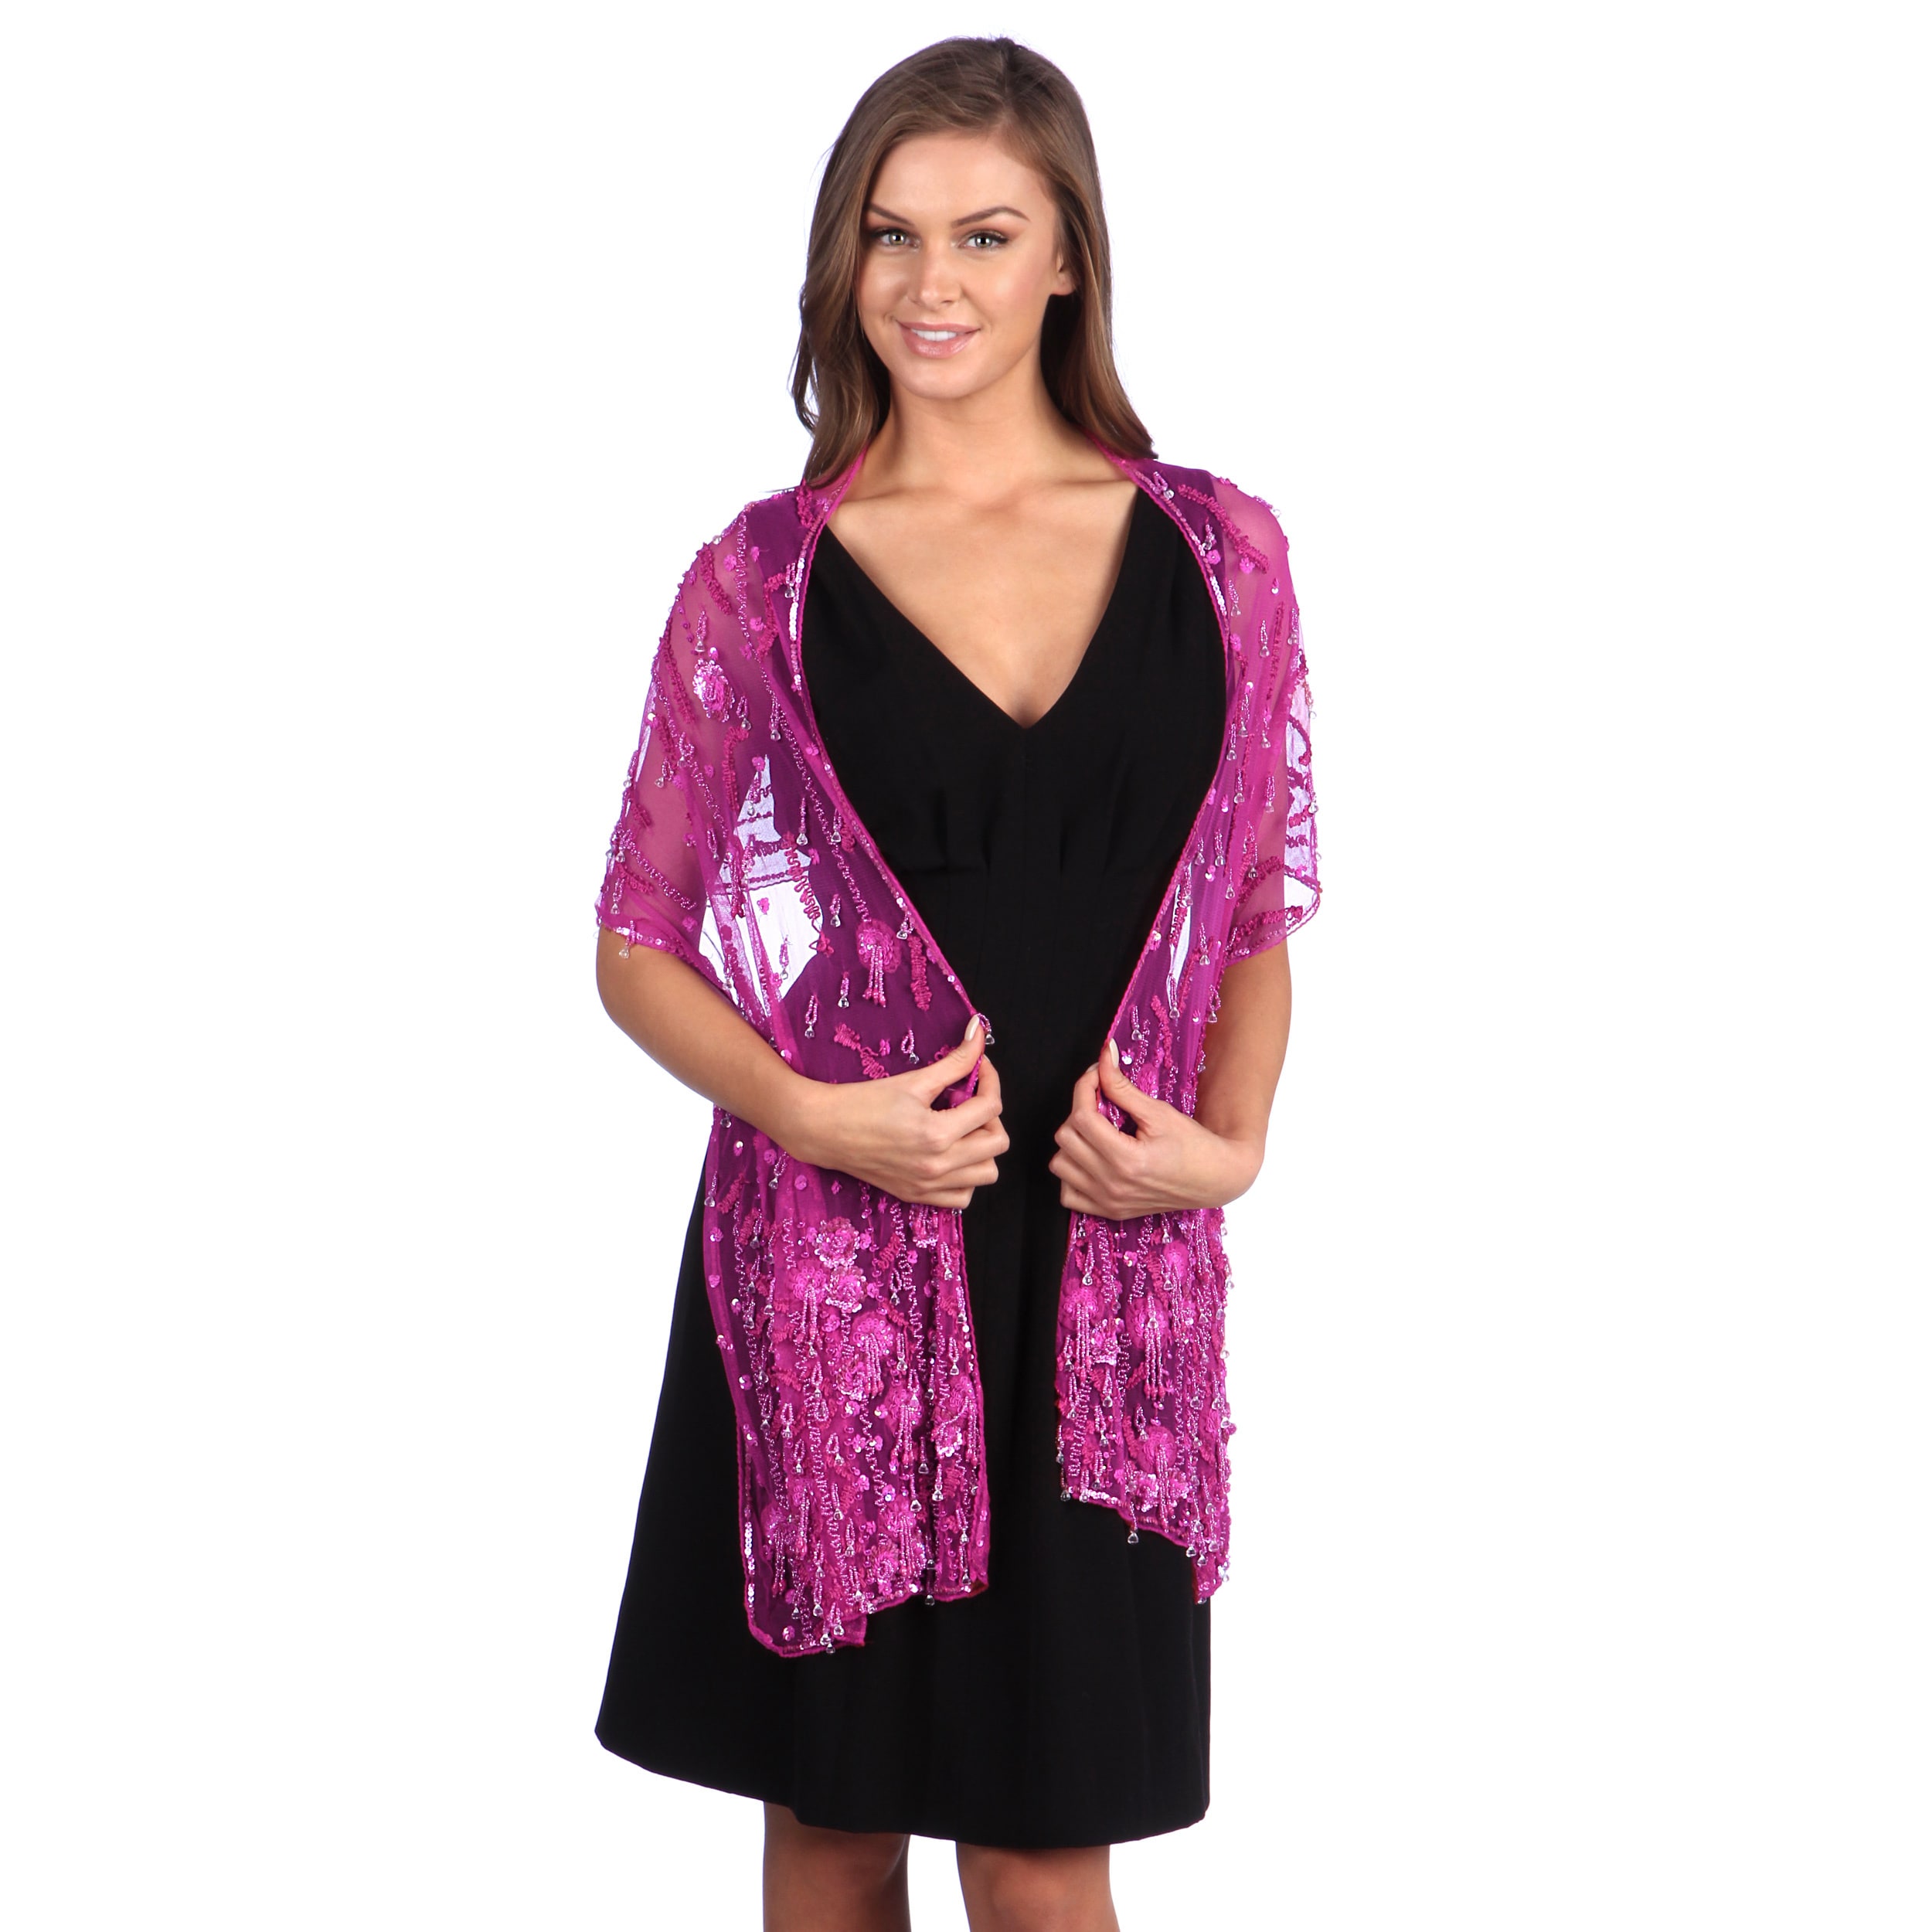 Selection Privee Paris Evening Dressy Fuchsia Beaded Silk Sheer Shawl Wrap